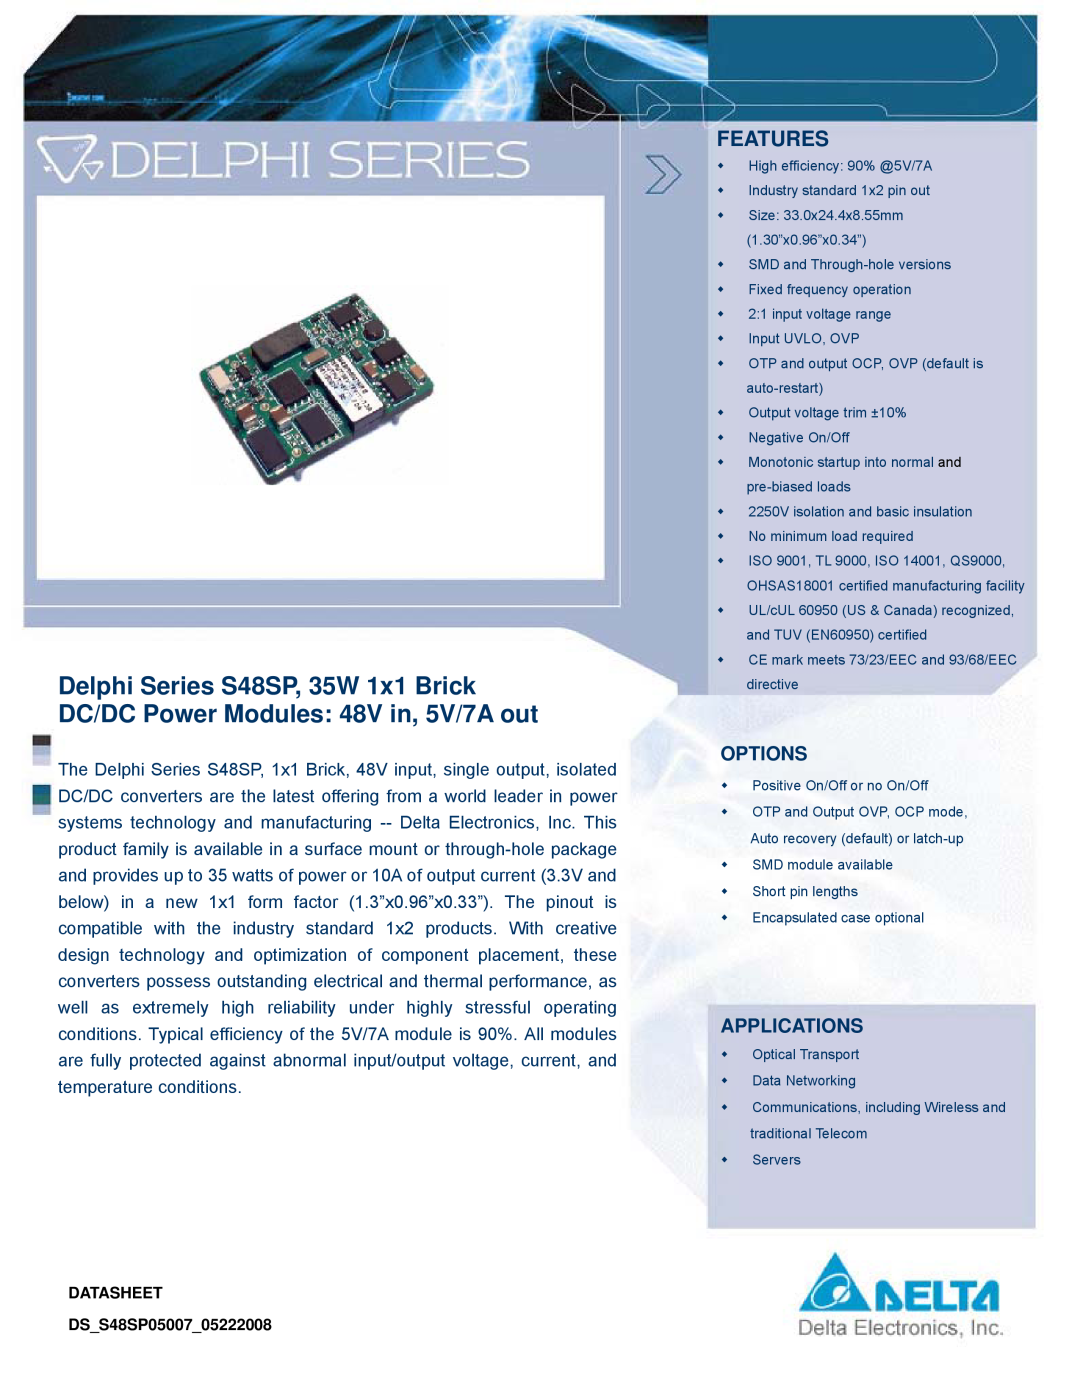 Delta Electronics S48SP manual Options, Applications, Features 